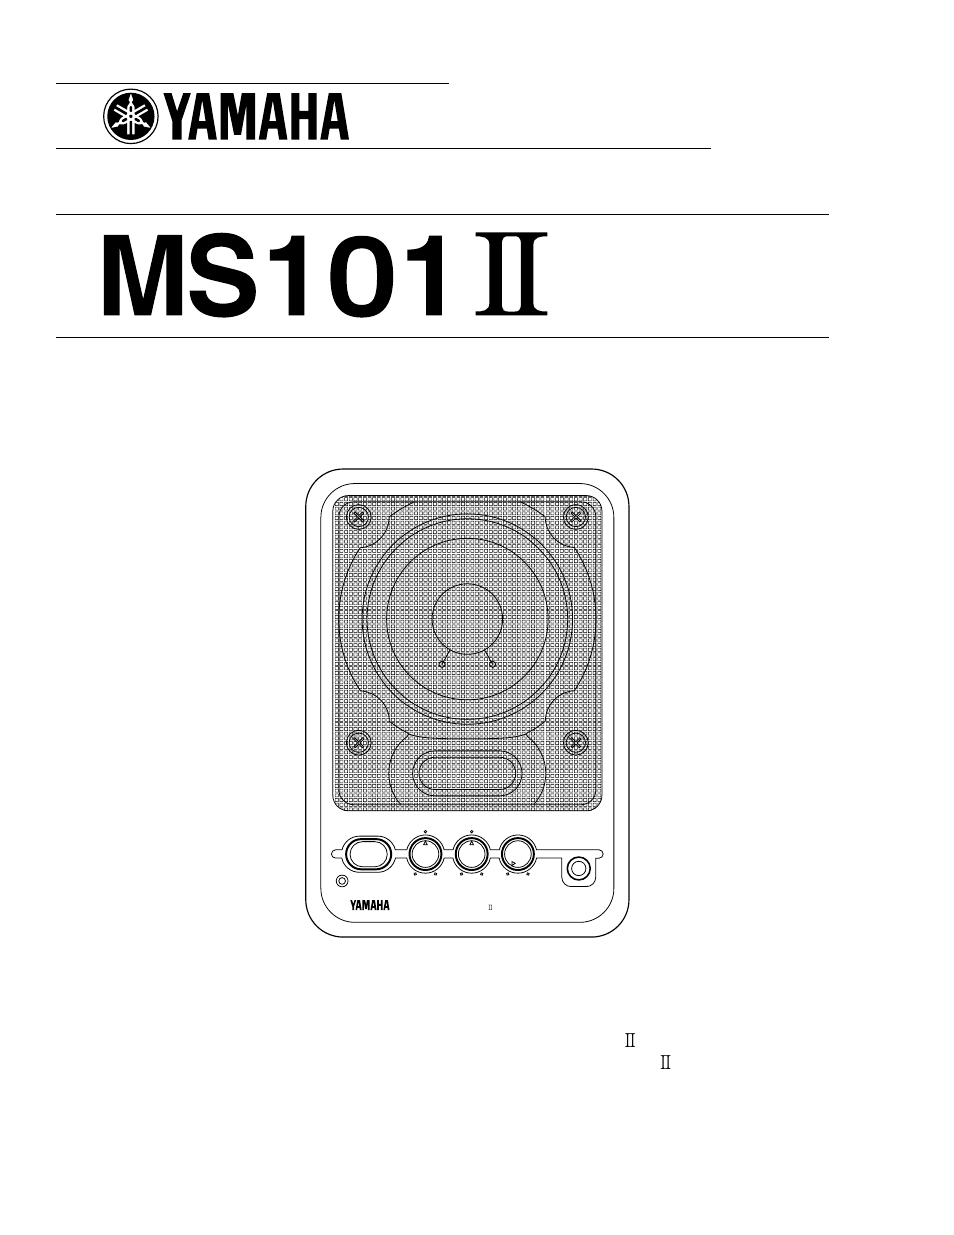 Yamaha MS101II User Manual | 8 pages